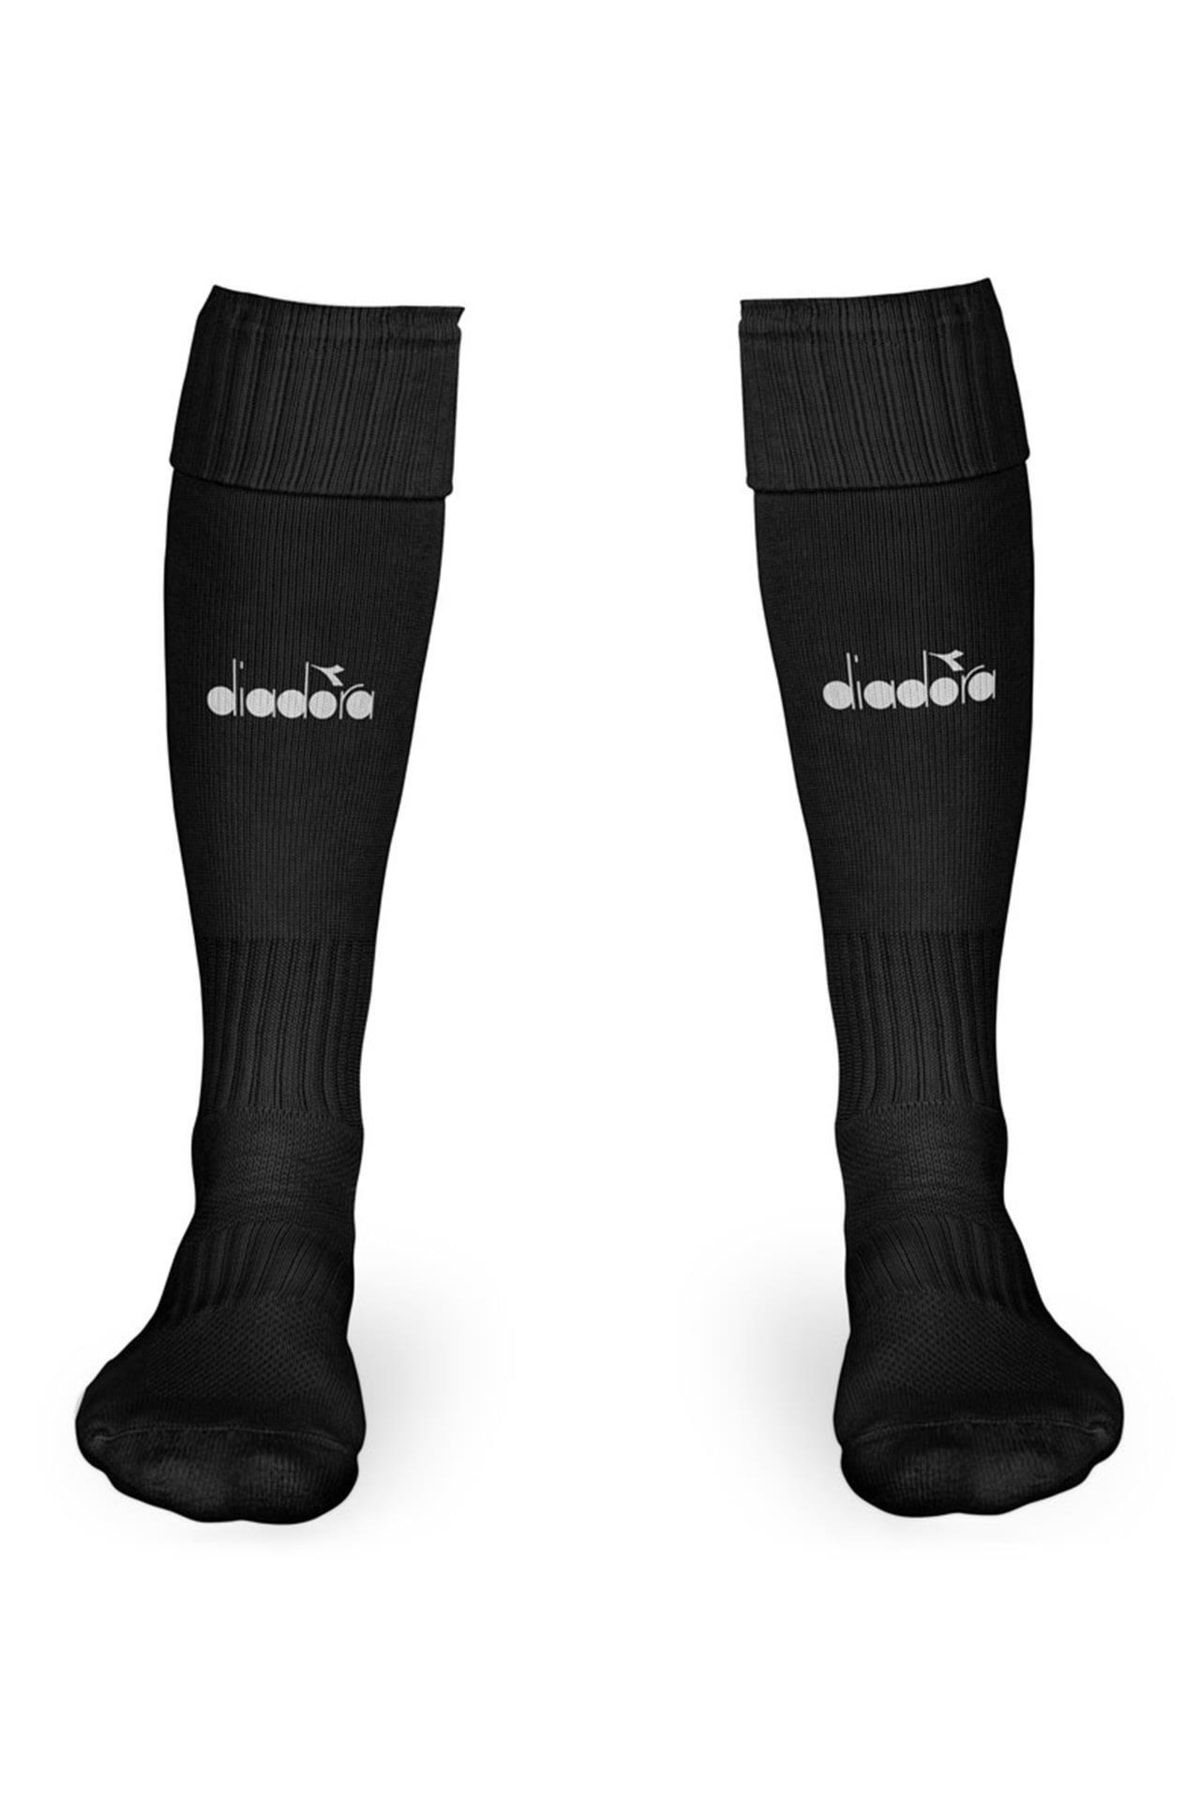 Diadora Orikon Siyah Uzun Futbol Çorabı Siyah 35-39